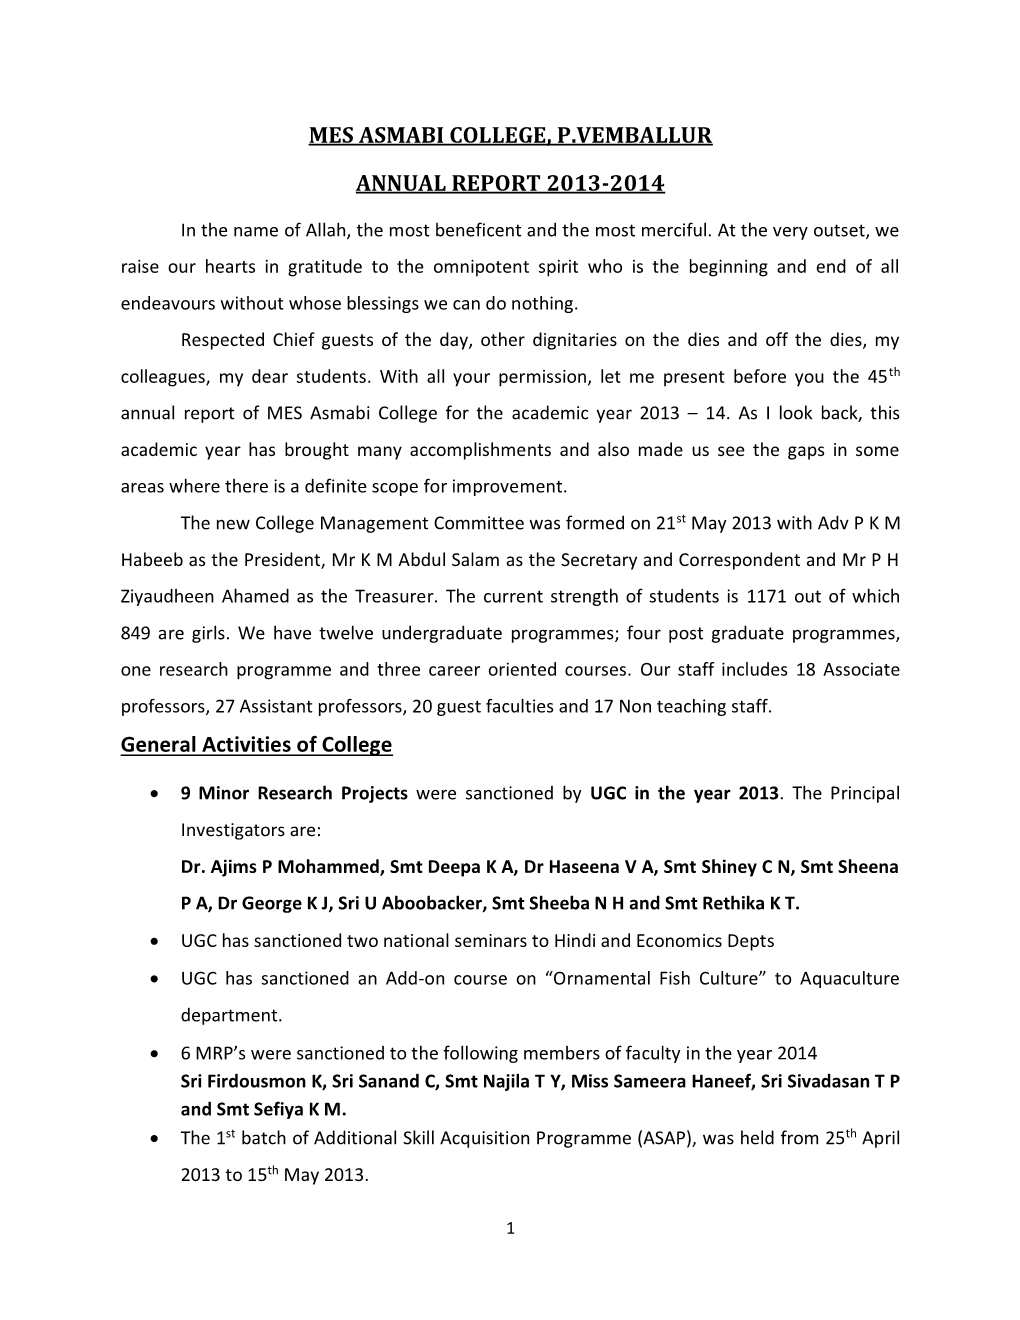 Mes Asmabi College, P.Vemballur Annual Report 2013-2014